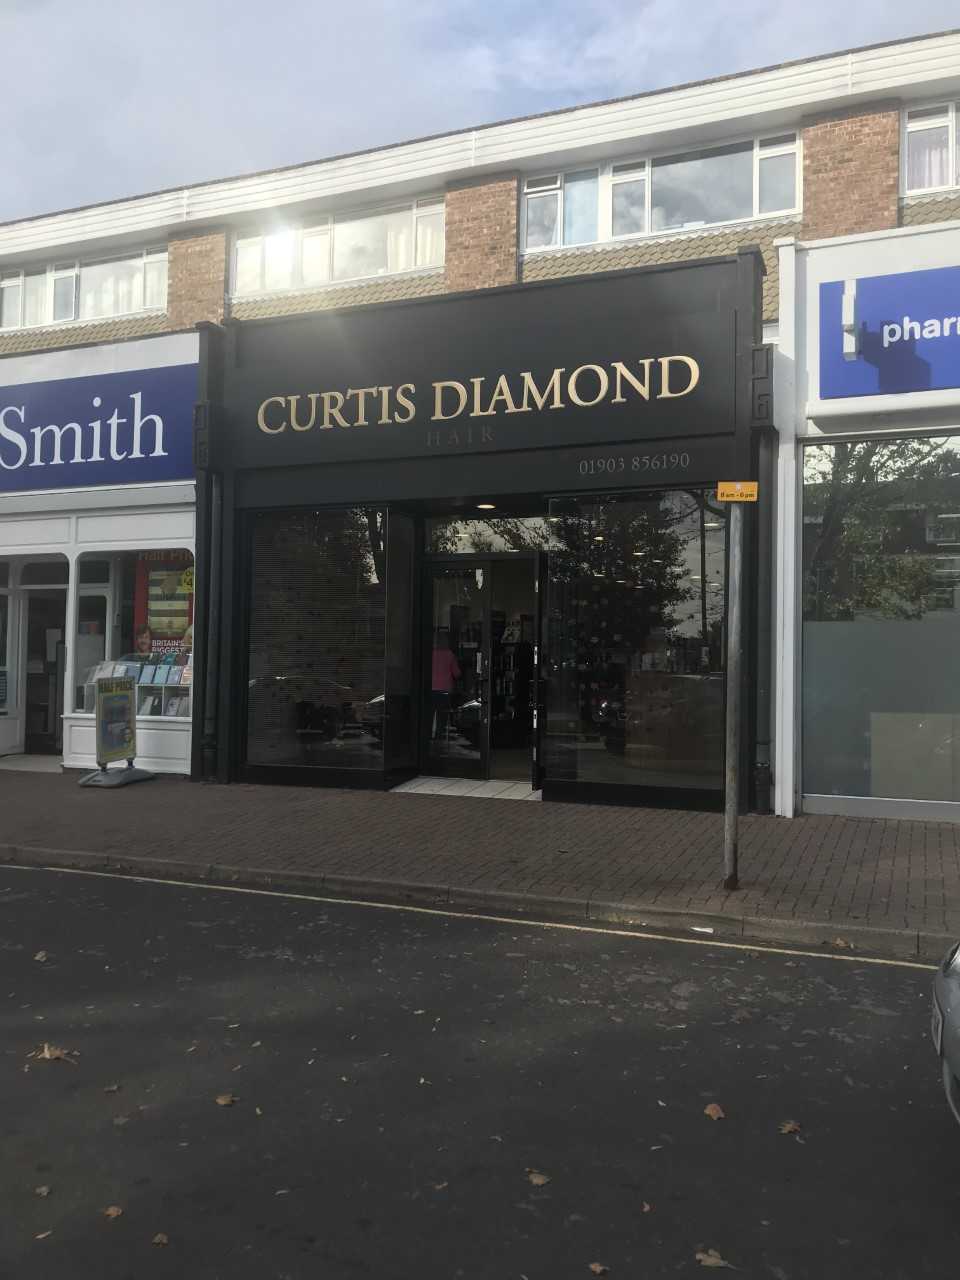 Curtis Diamond in Rustington (1)